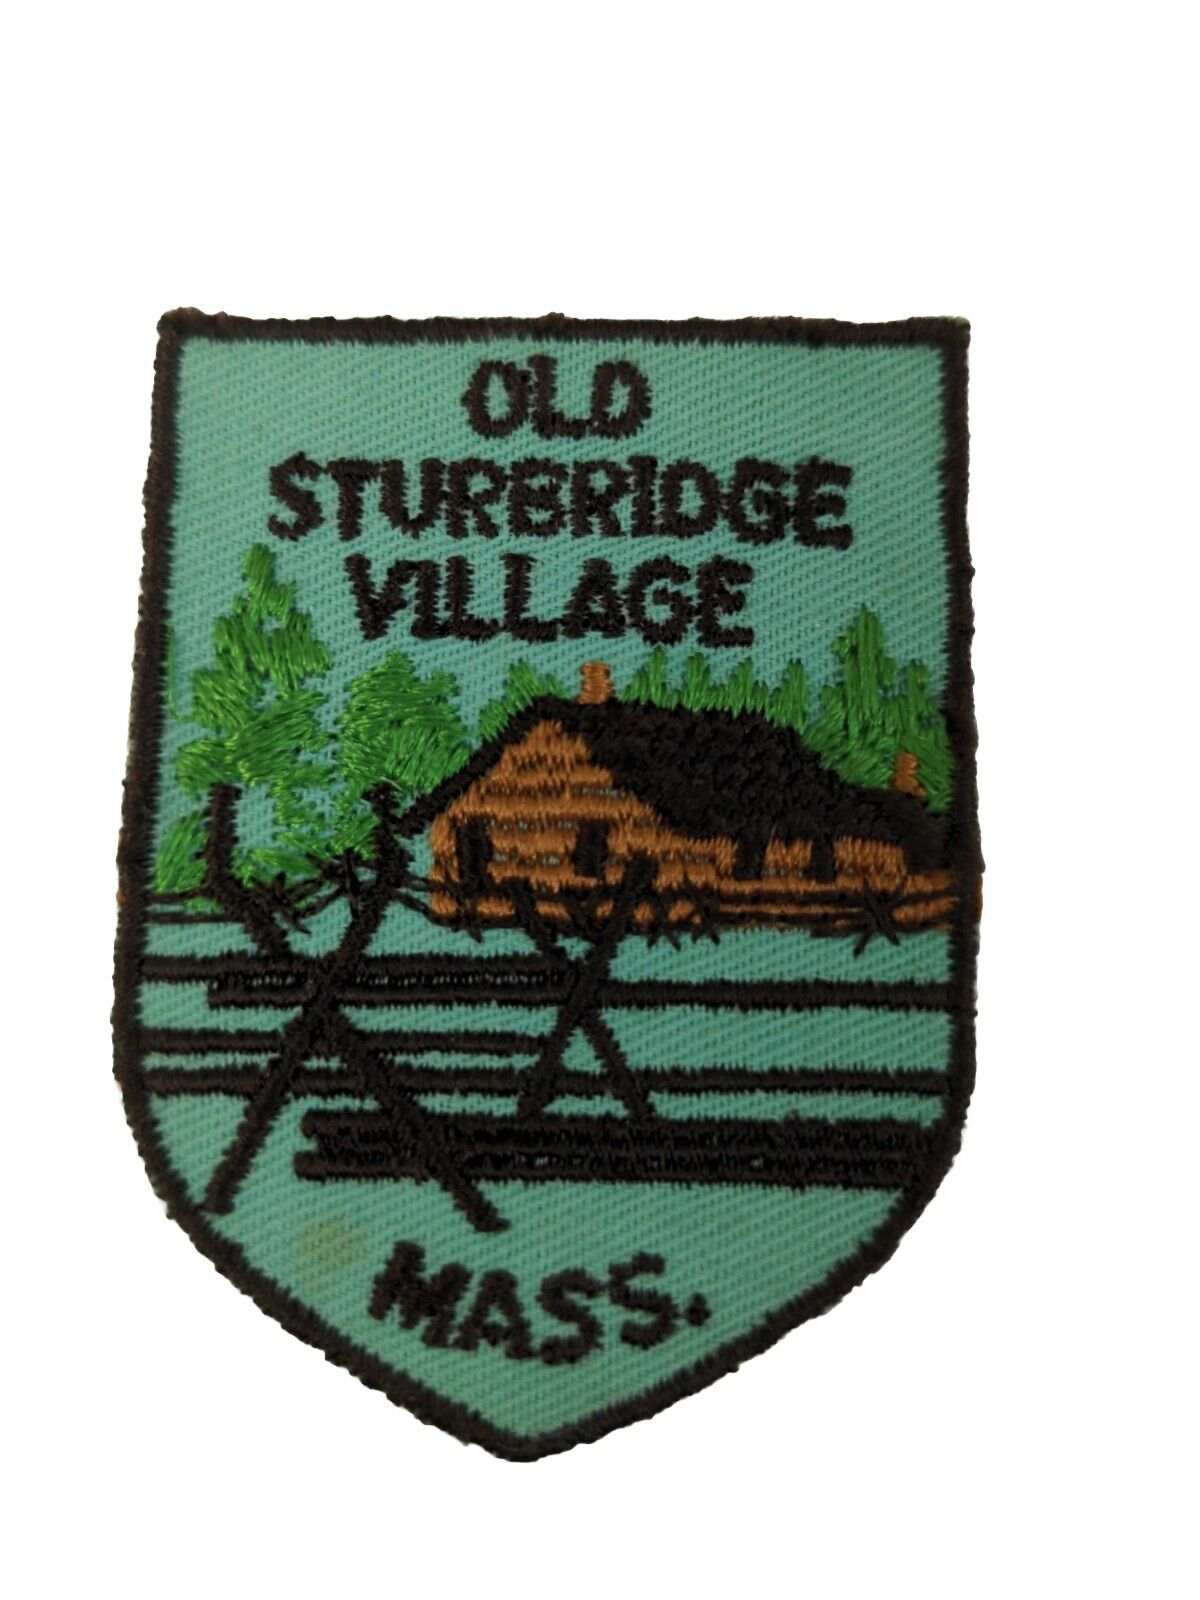 VTG Old Sturbridge Village Jacket Patch Massachusetts Travel Souvenir NEW NOS